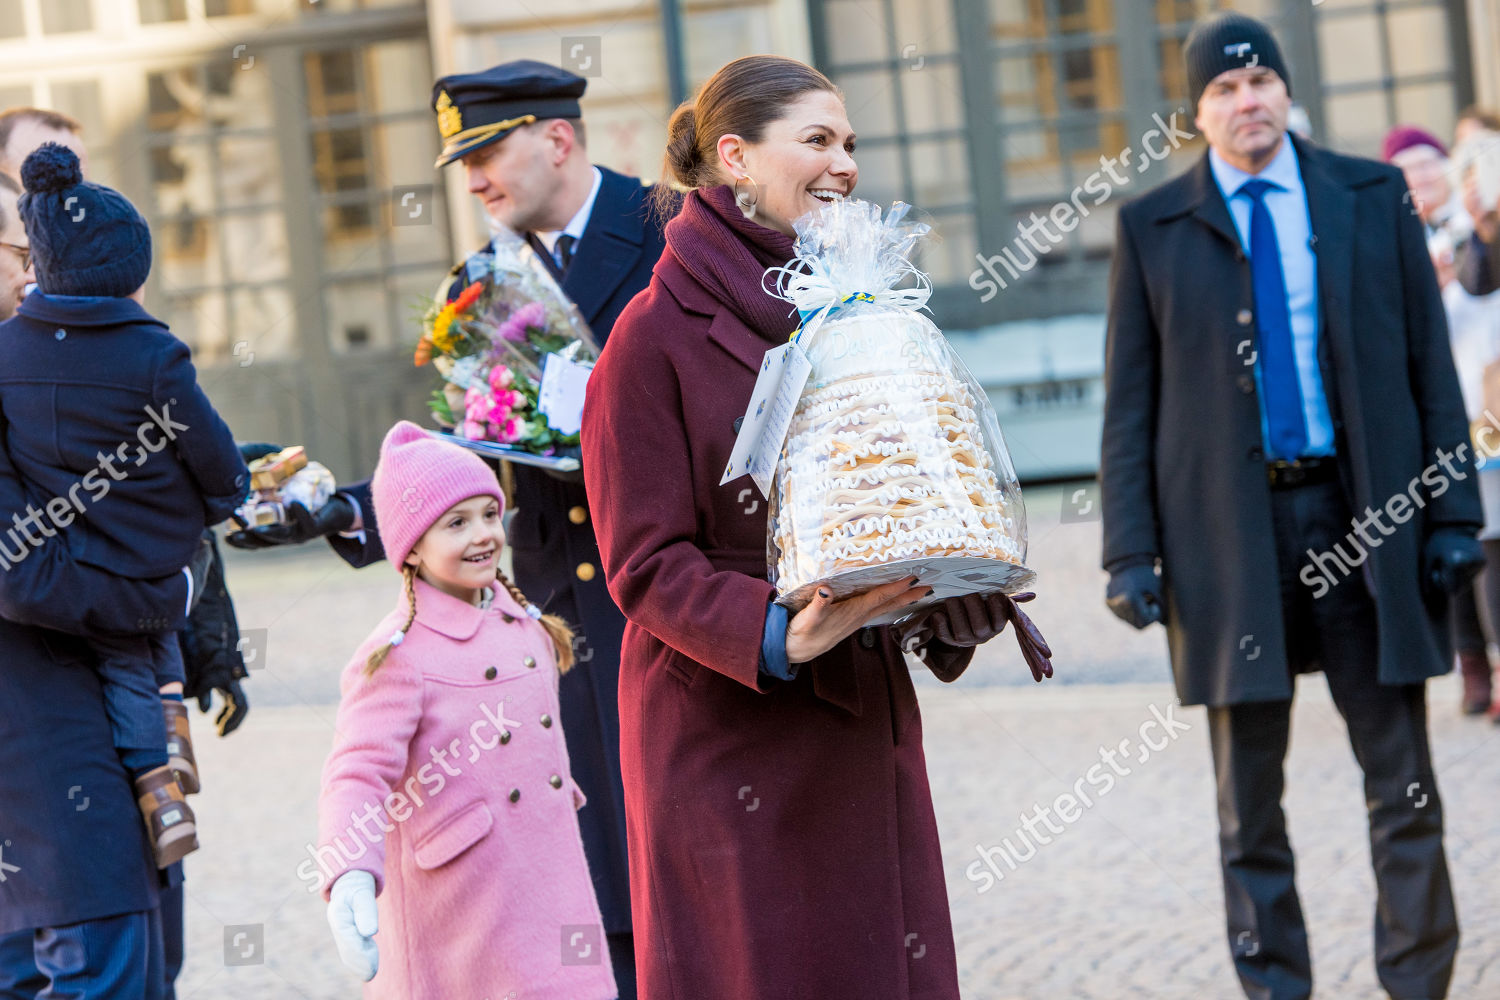 crown-princess-victoria-name-day-celebrations-stockholm-sweden-shutterstock-editorial-10151935r.jpg